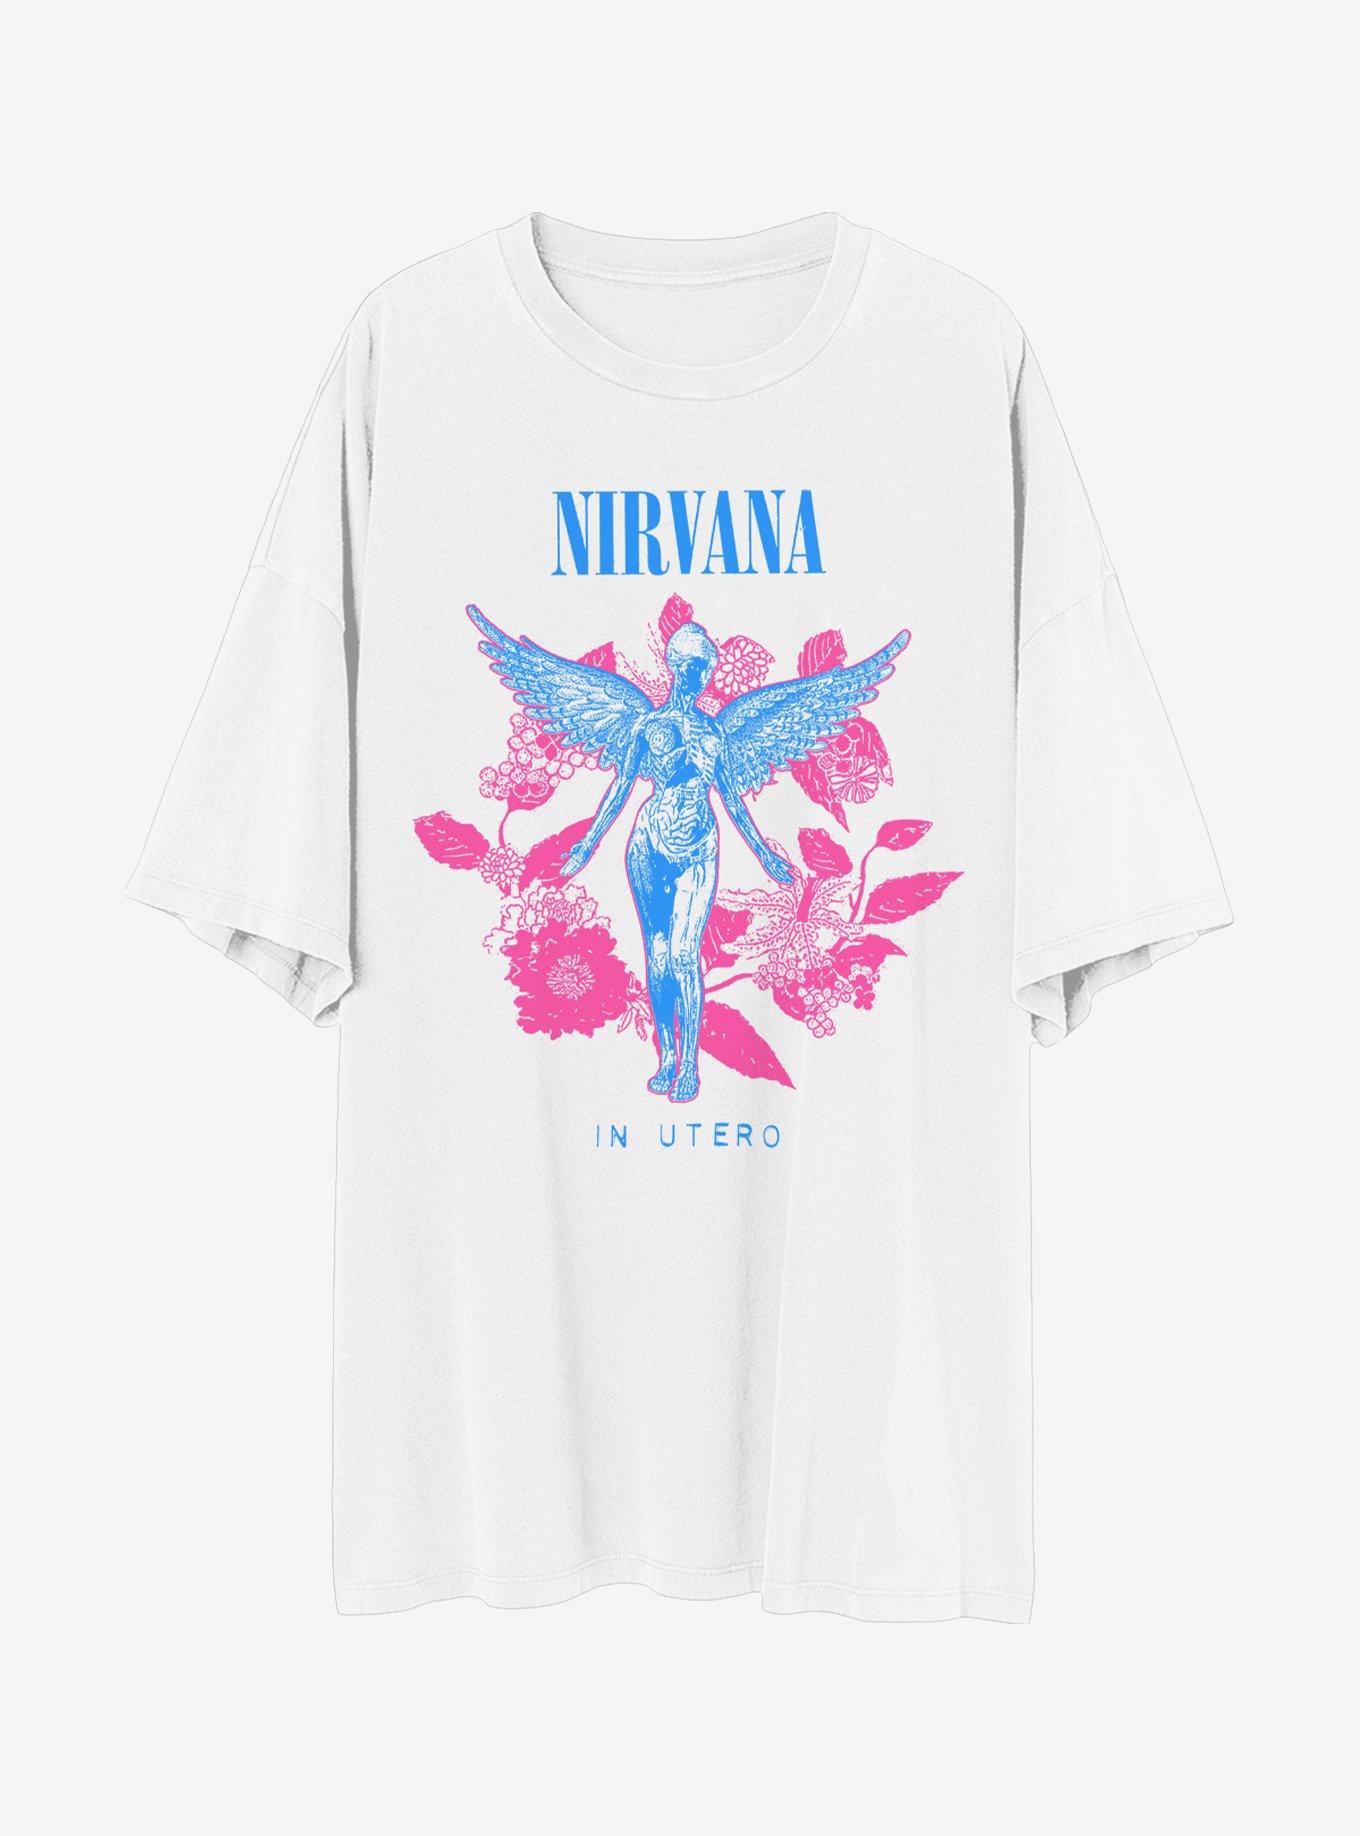 Nirvana In Utero Boyfriend Fit Girls T-Shirt, BRIGHT WHITE, hi-res